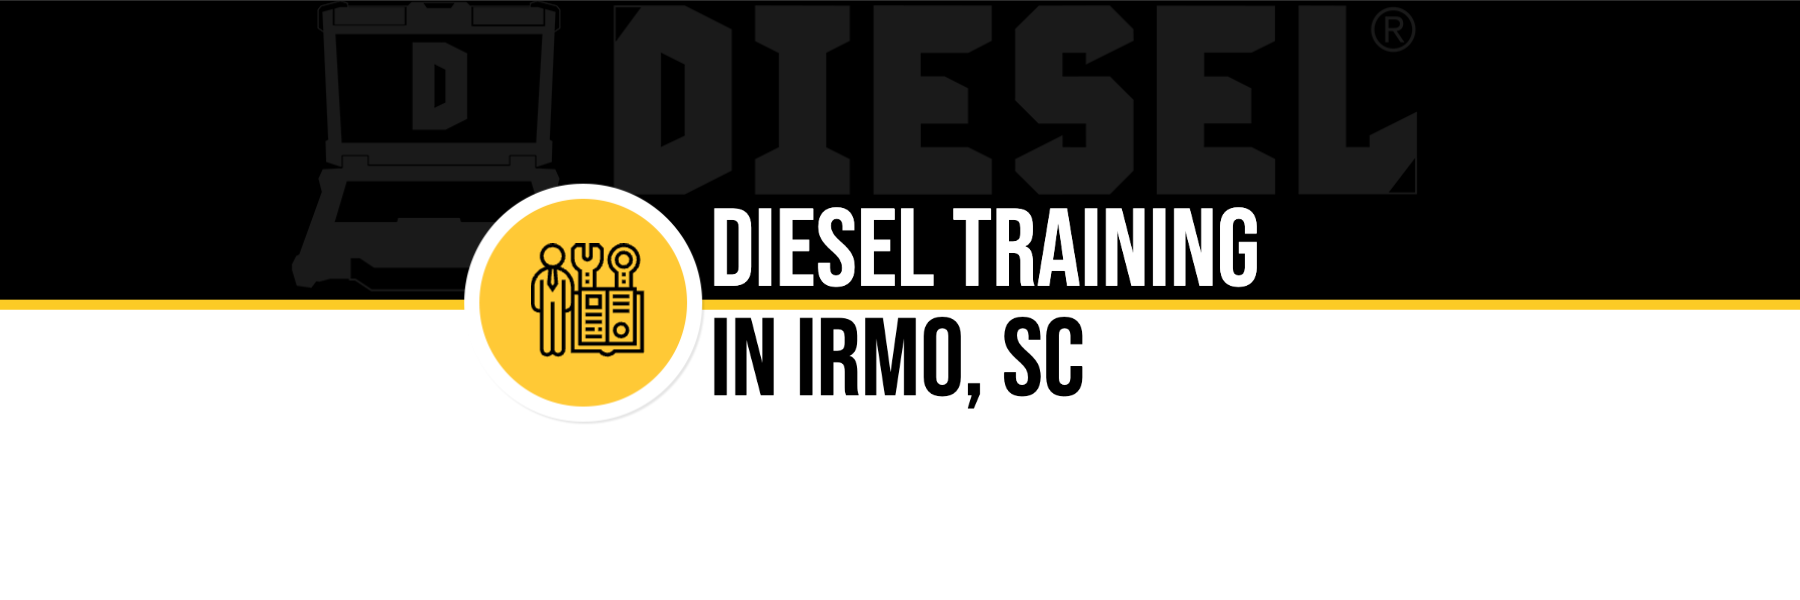 September Diesel Training in Irmo, SC